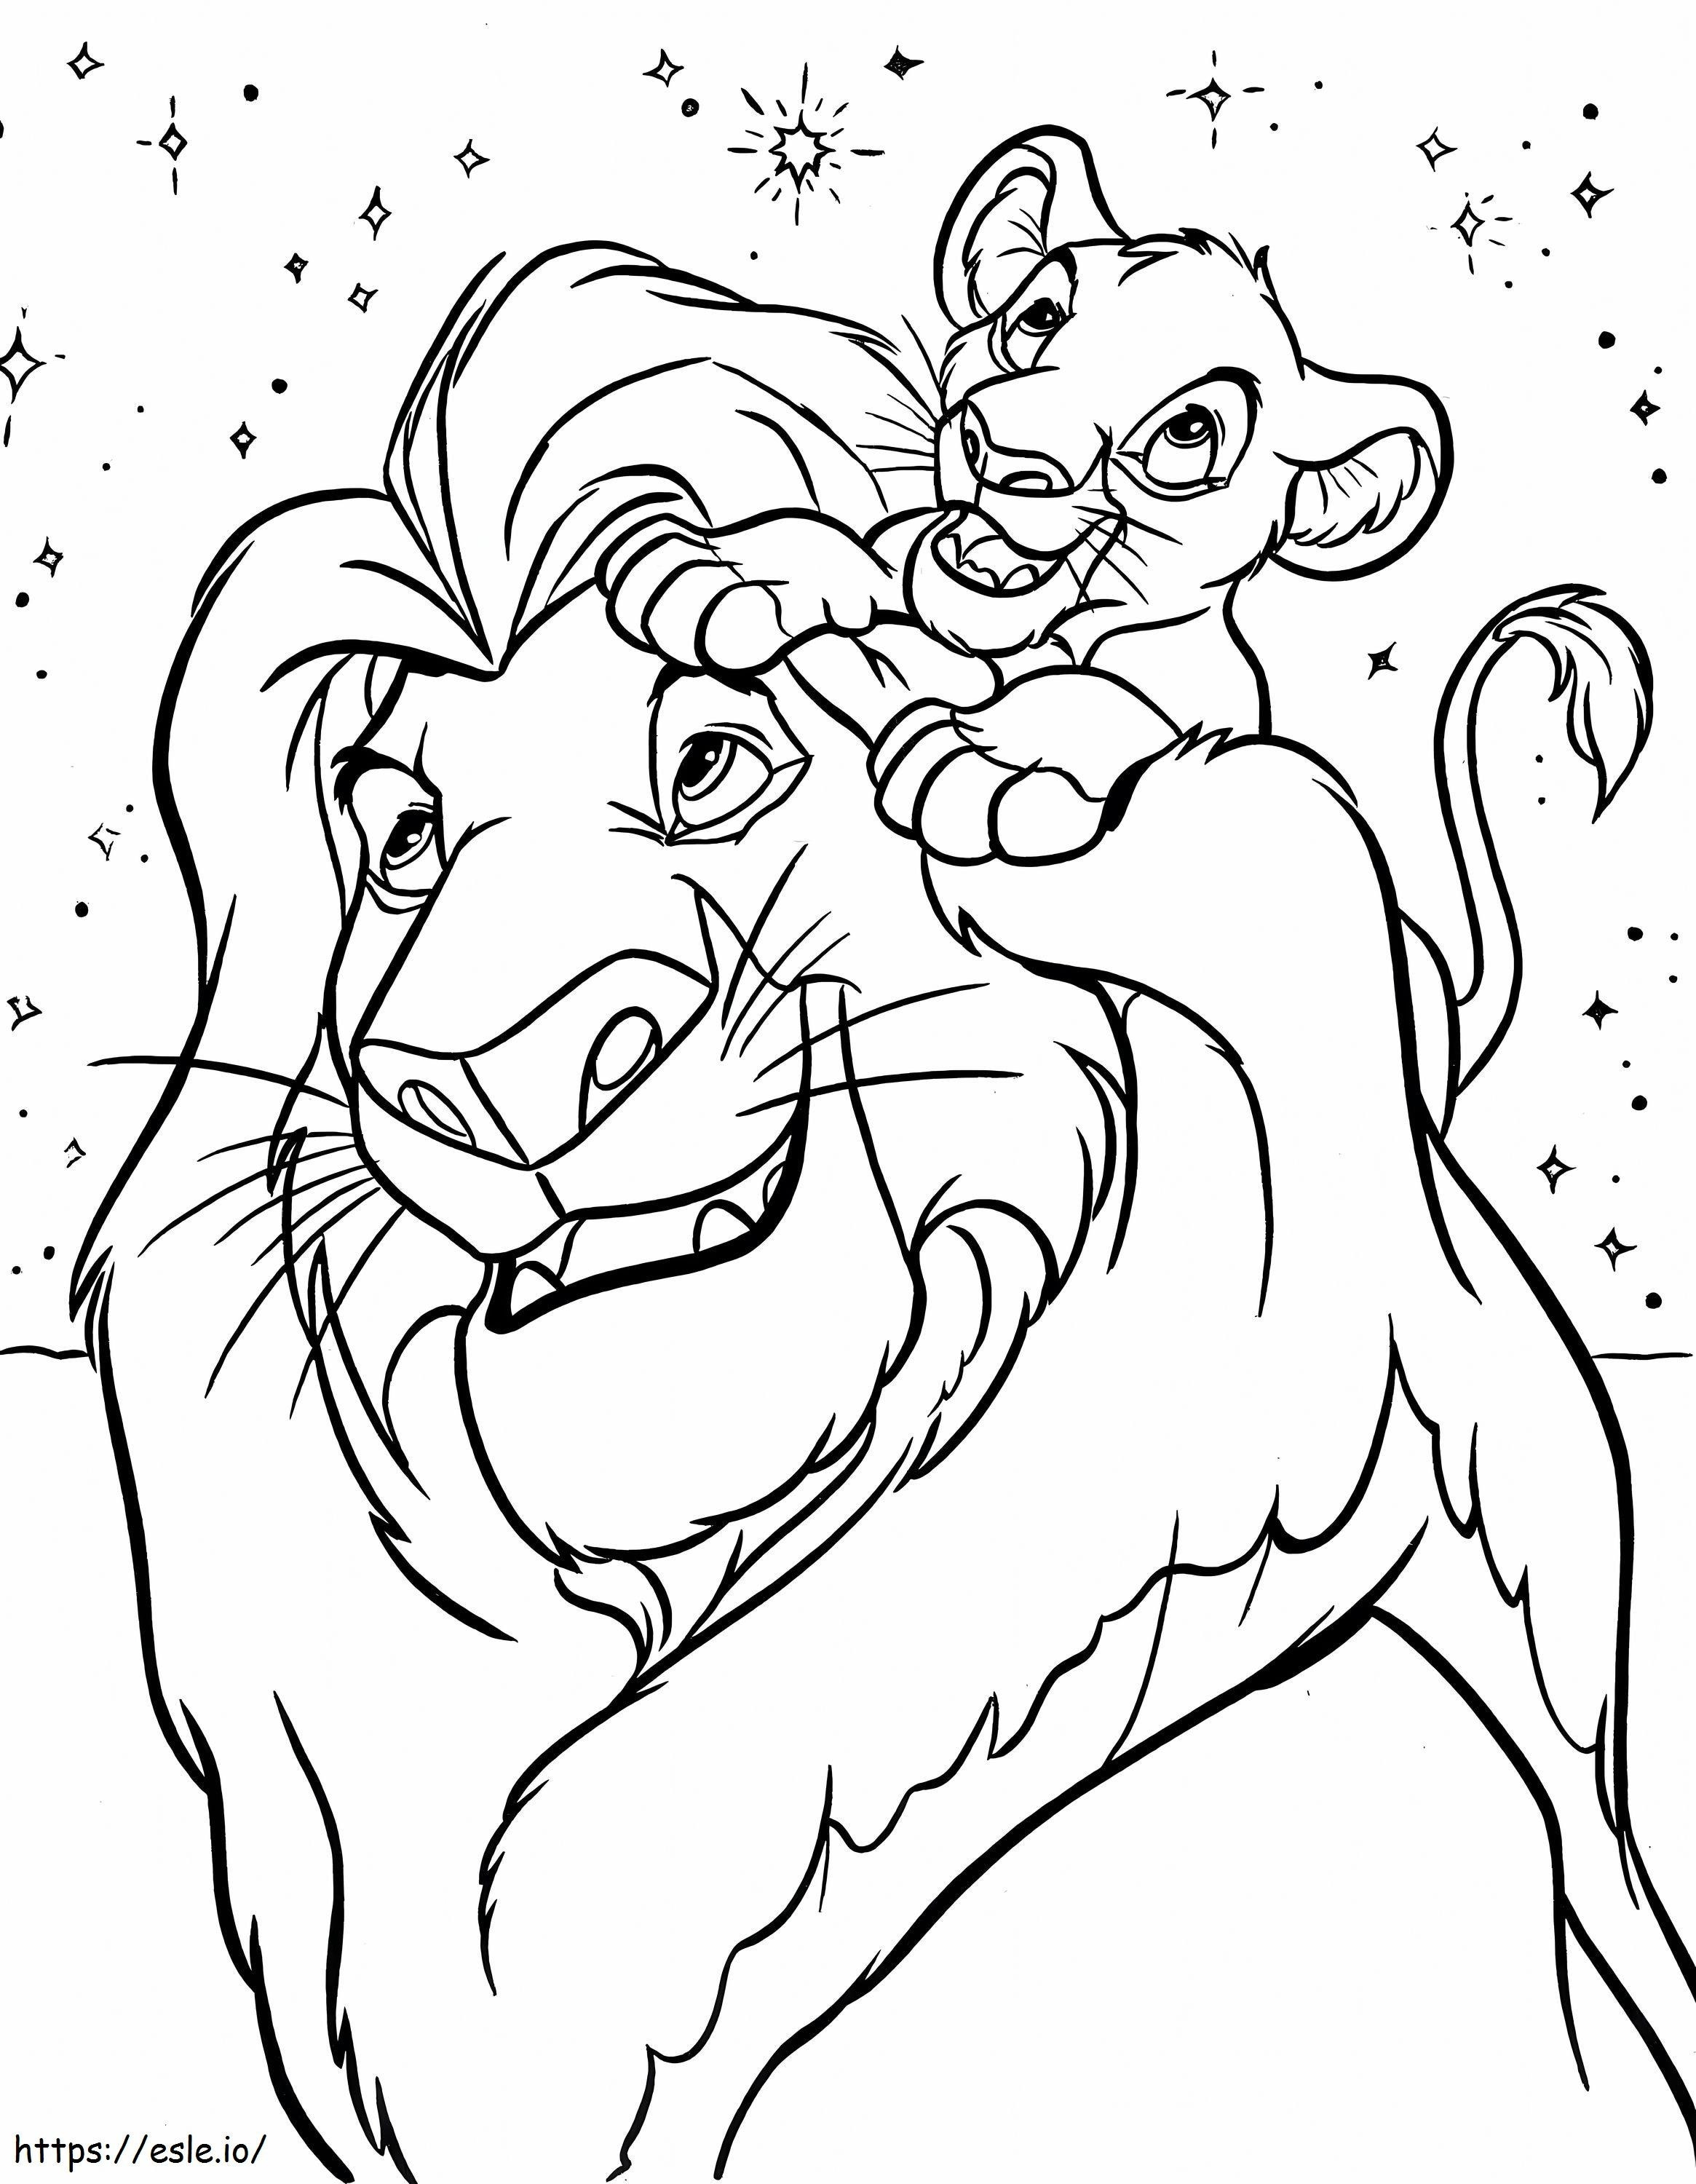 Disney-König der Löwen ausmalbilder